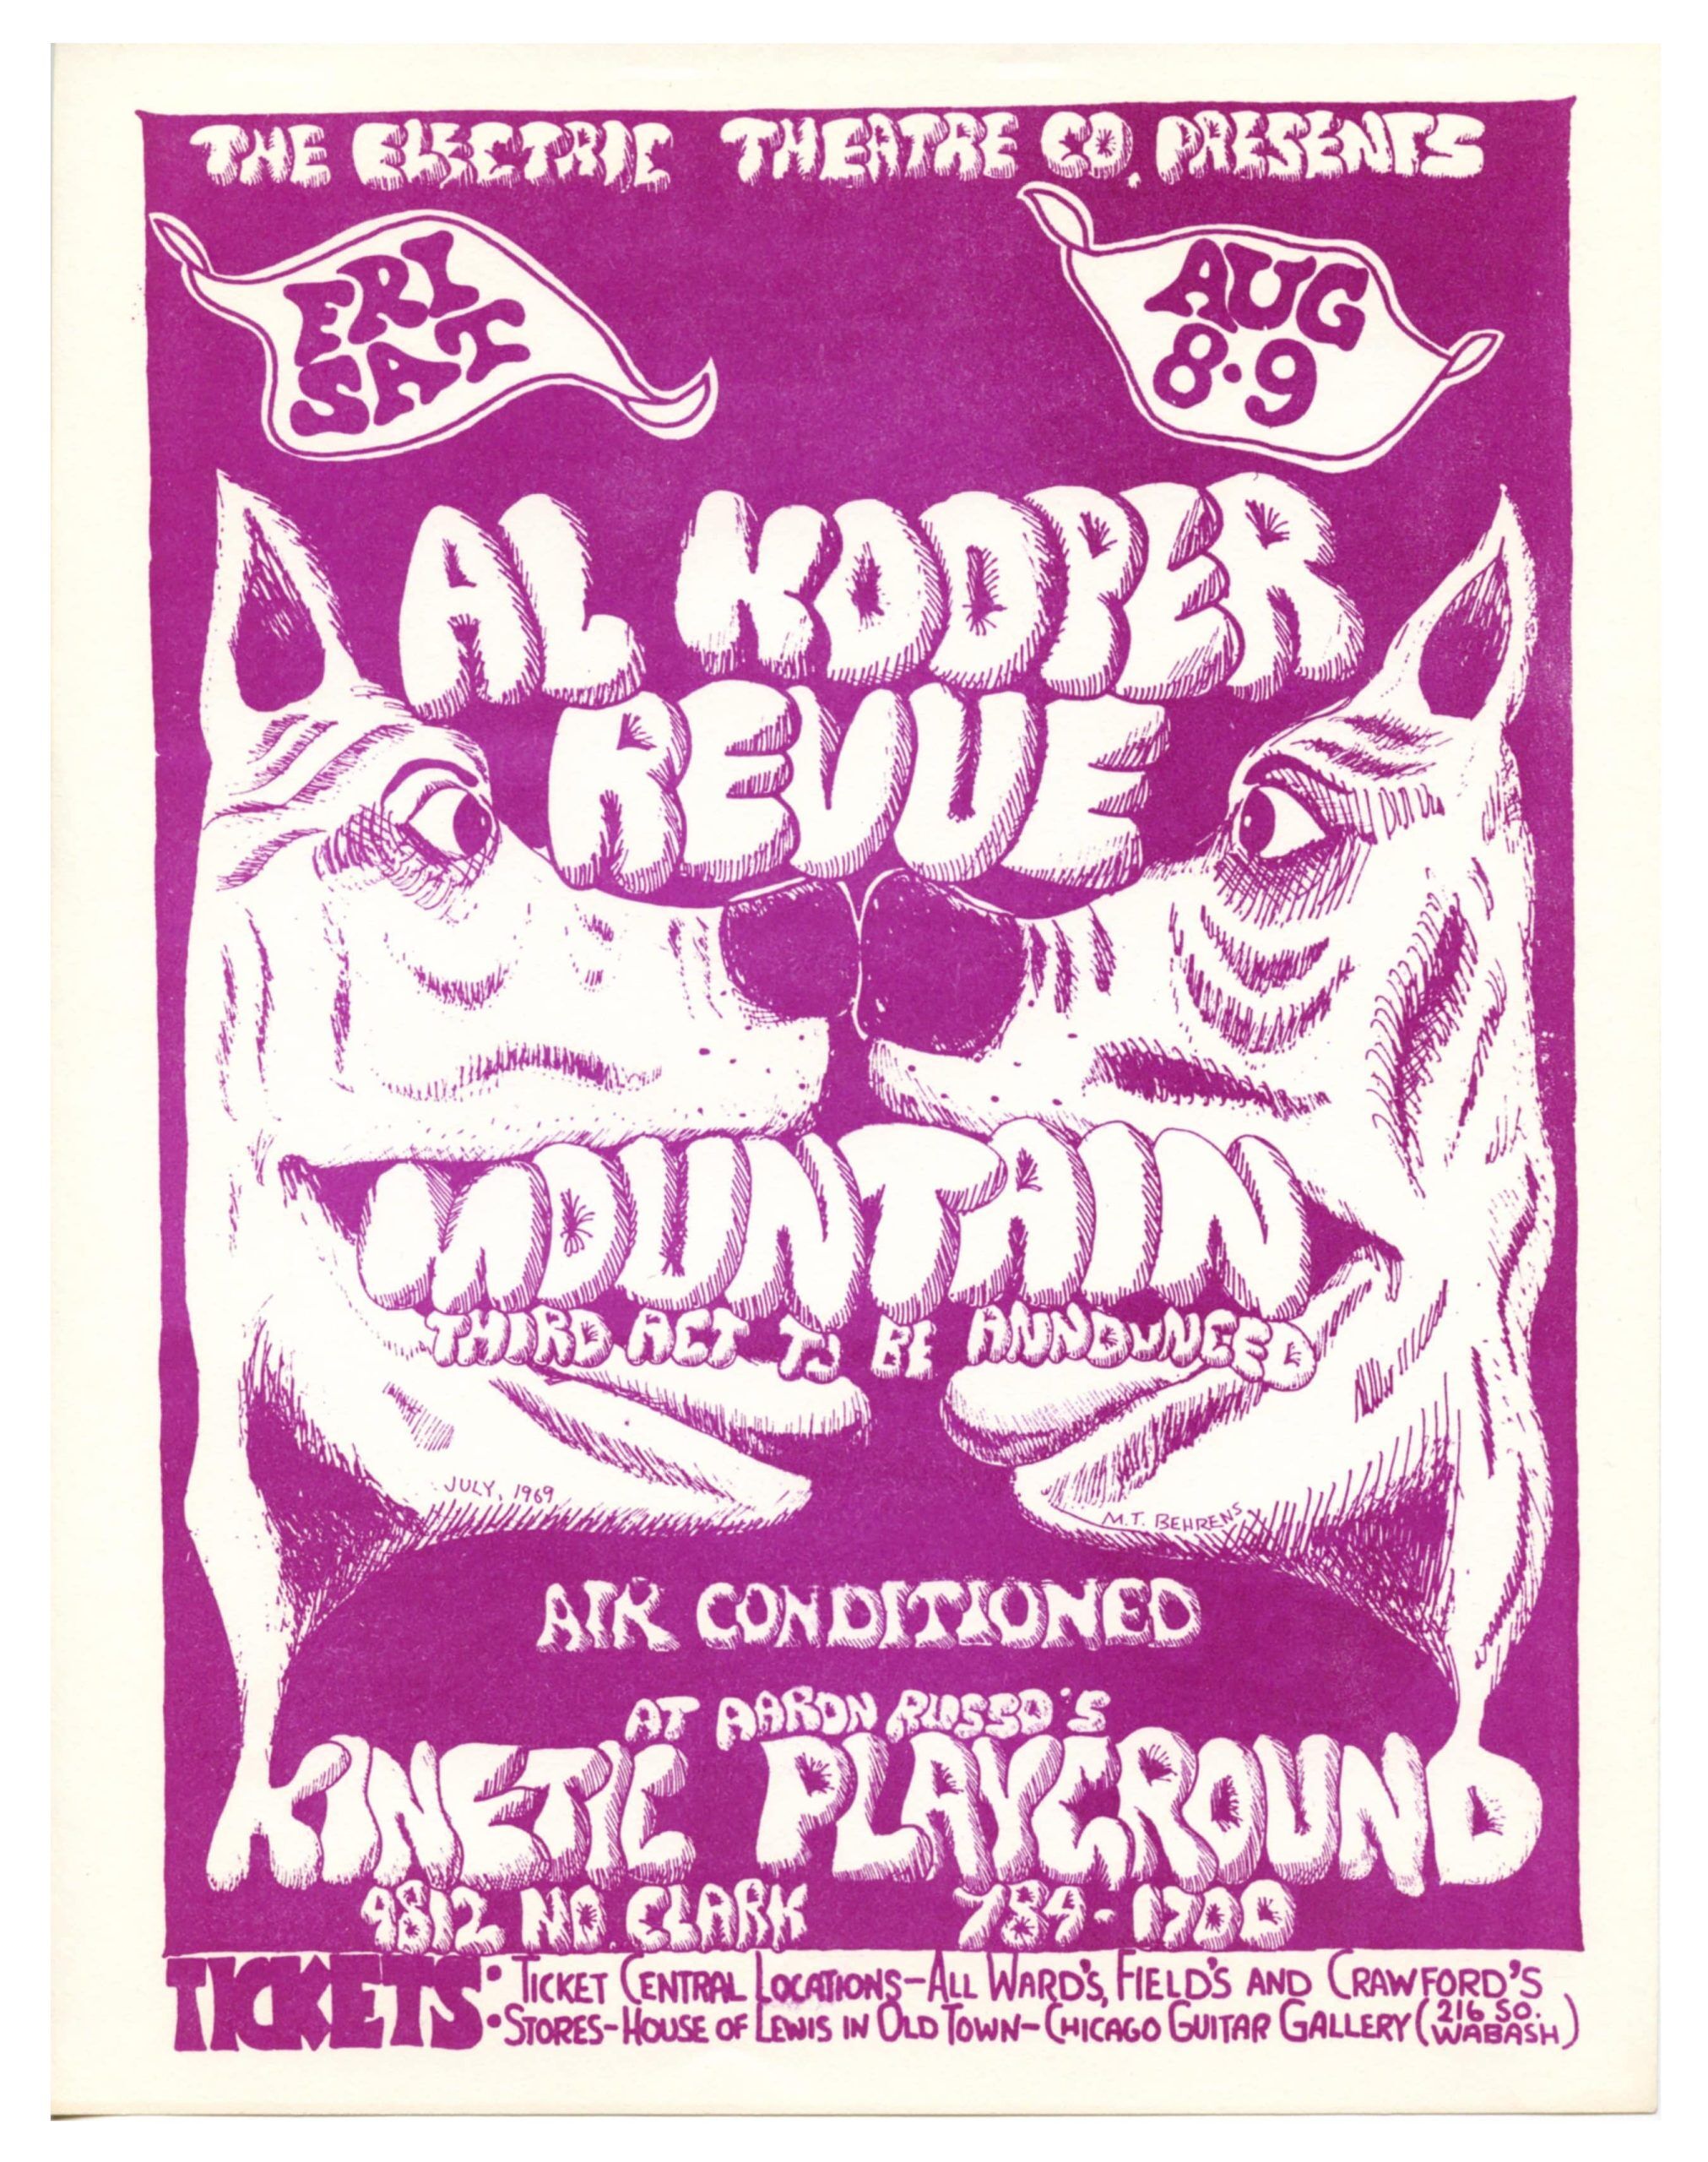 Al Kooper Handbill w/ the Revue Mountain 1969 Kinetic Playground